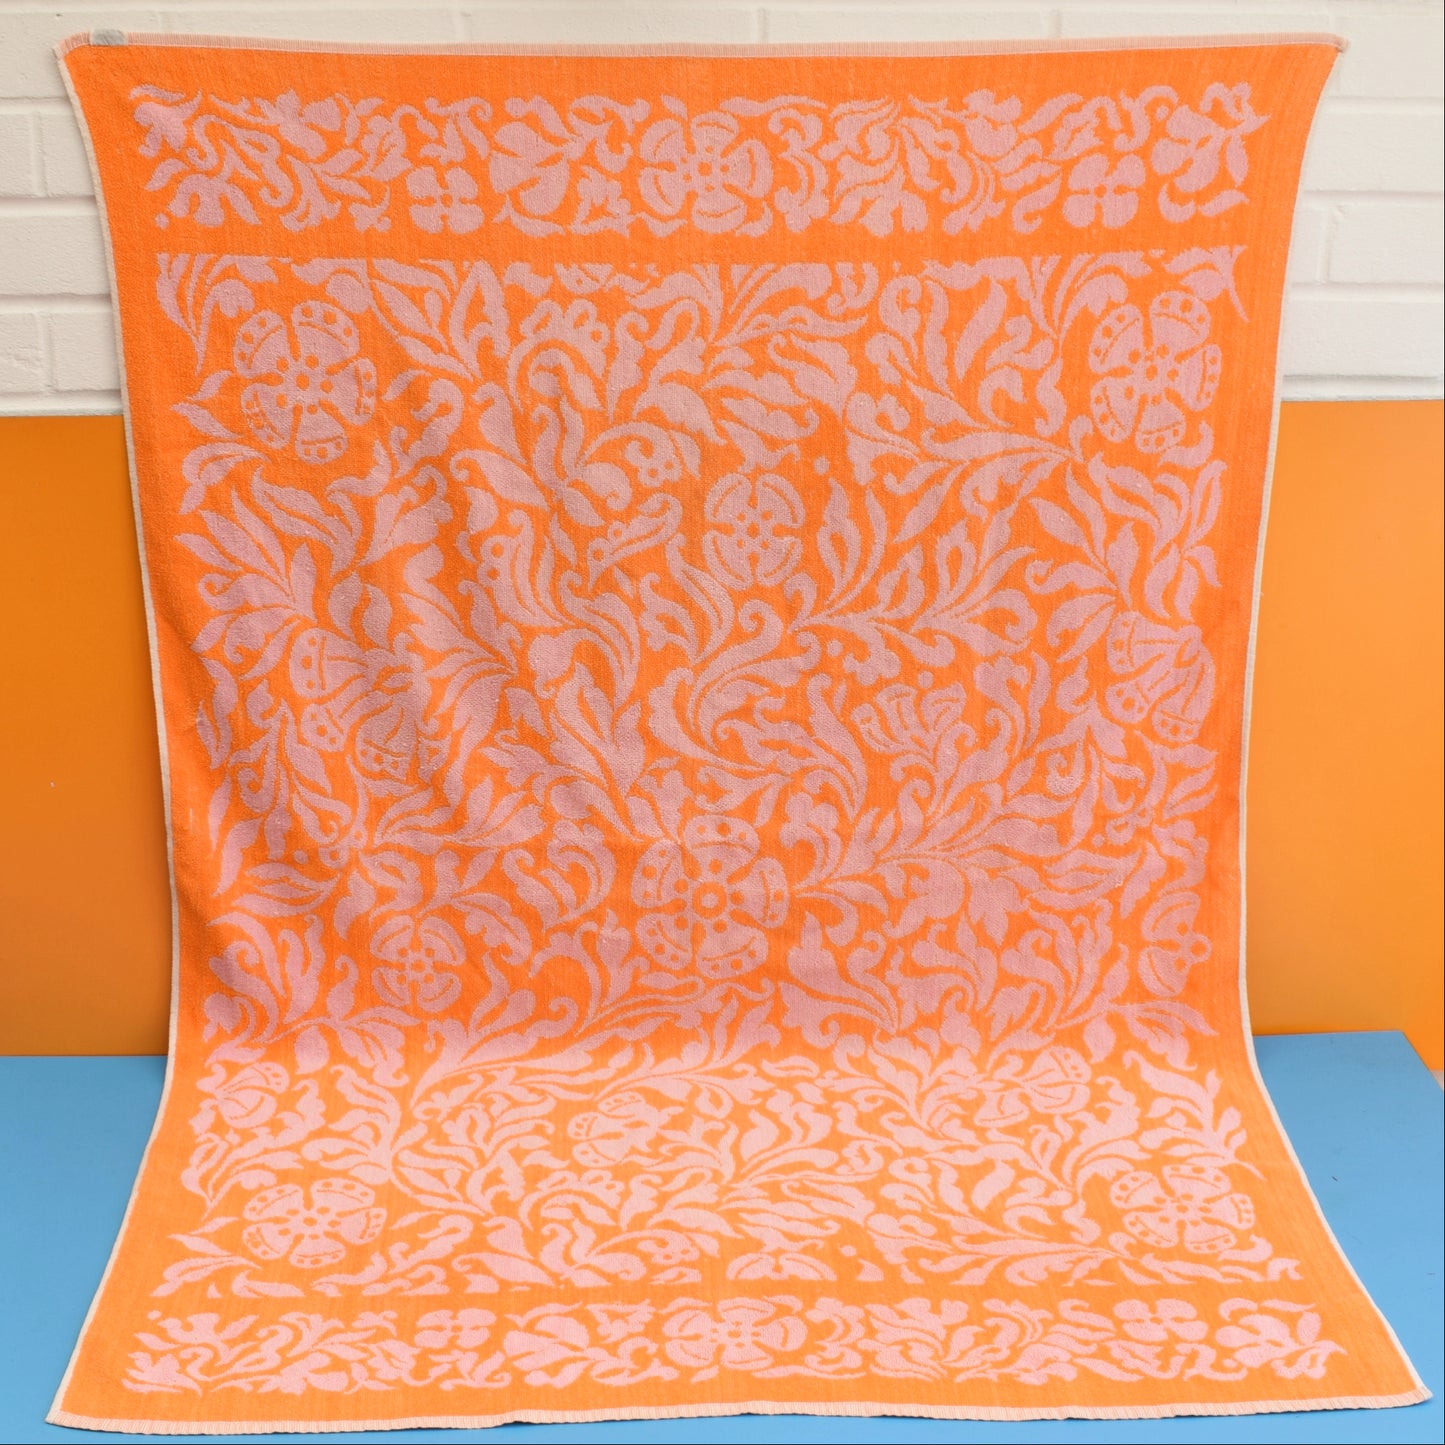 Vintage 1960s Cotton Bath Towel - Orange / Pink